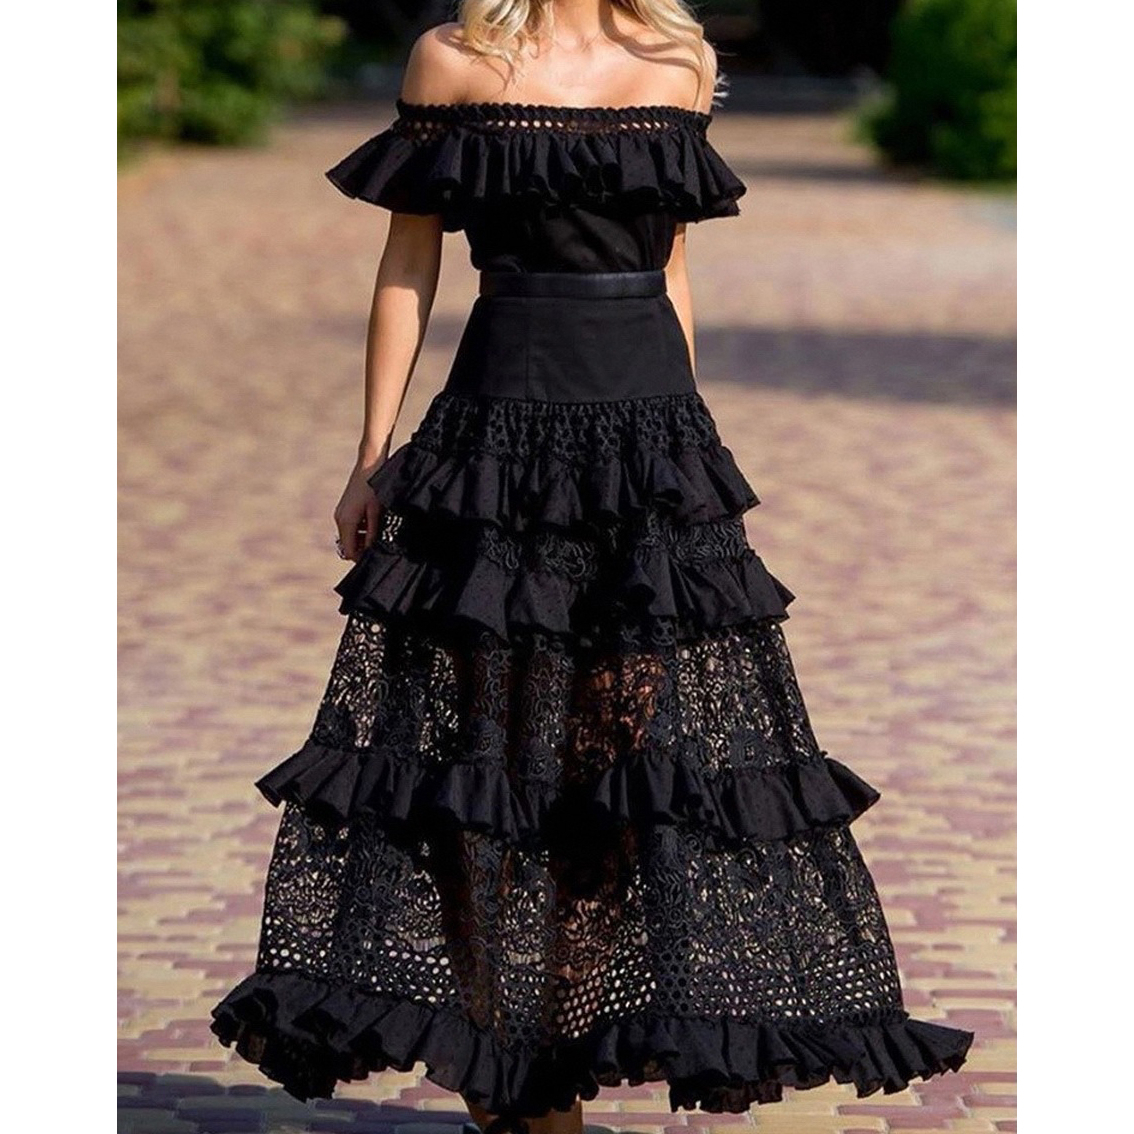 Sexy Lace Strap Maxi Dress - Black, M